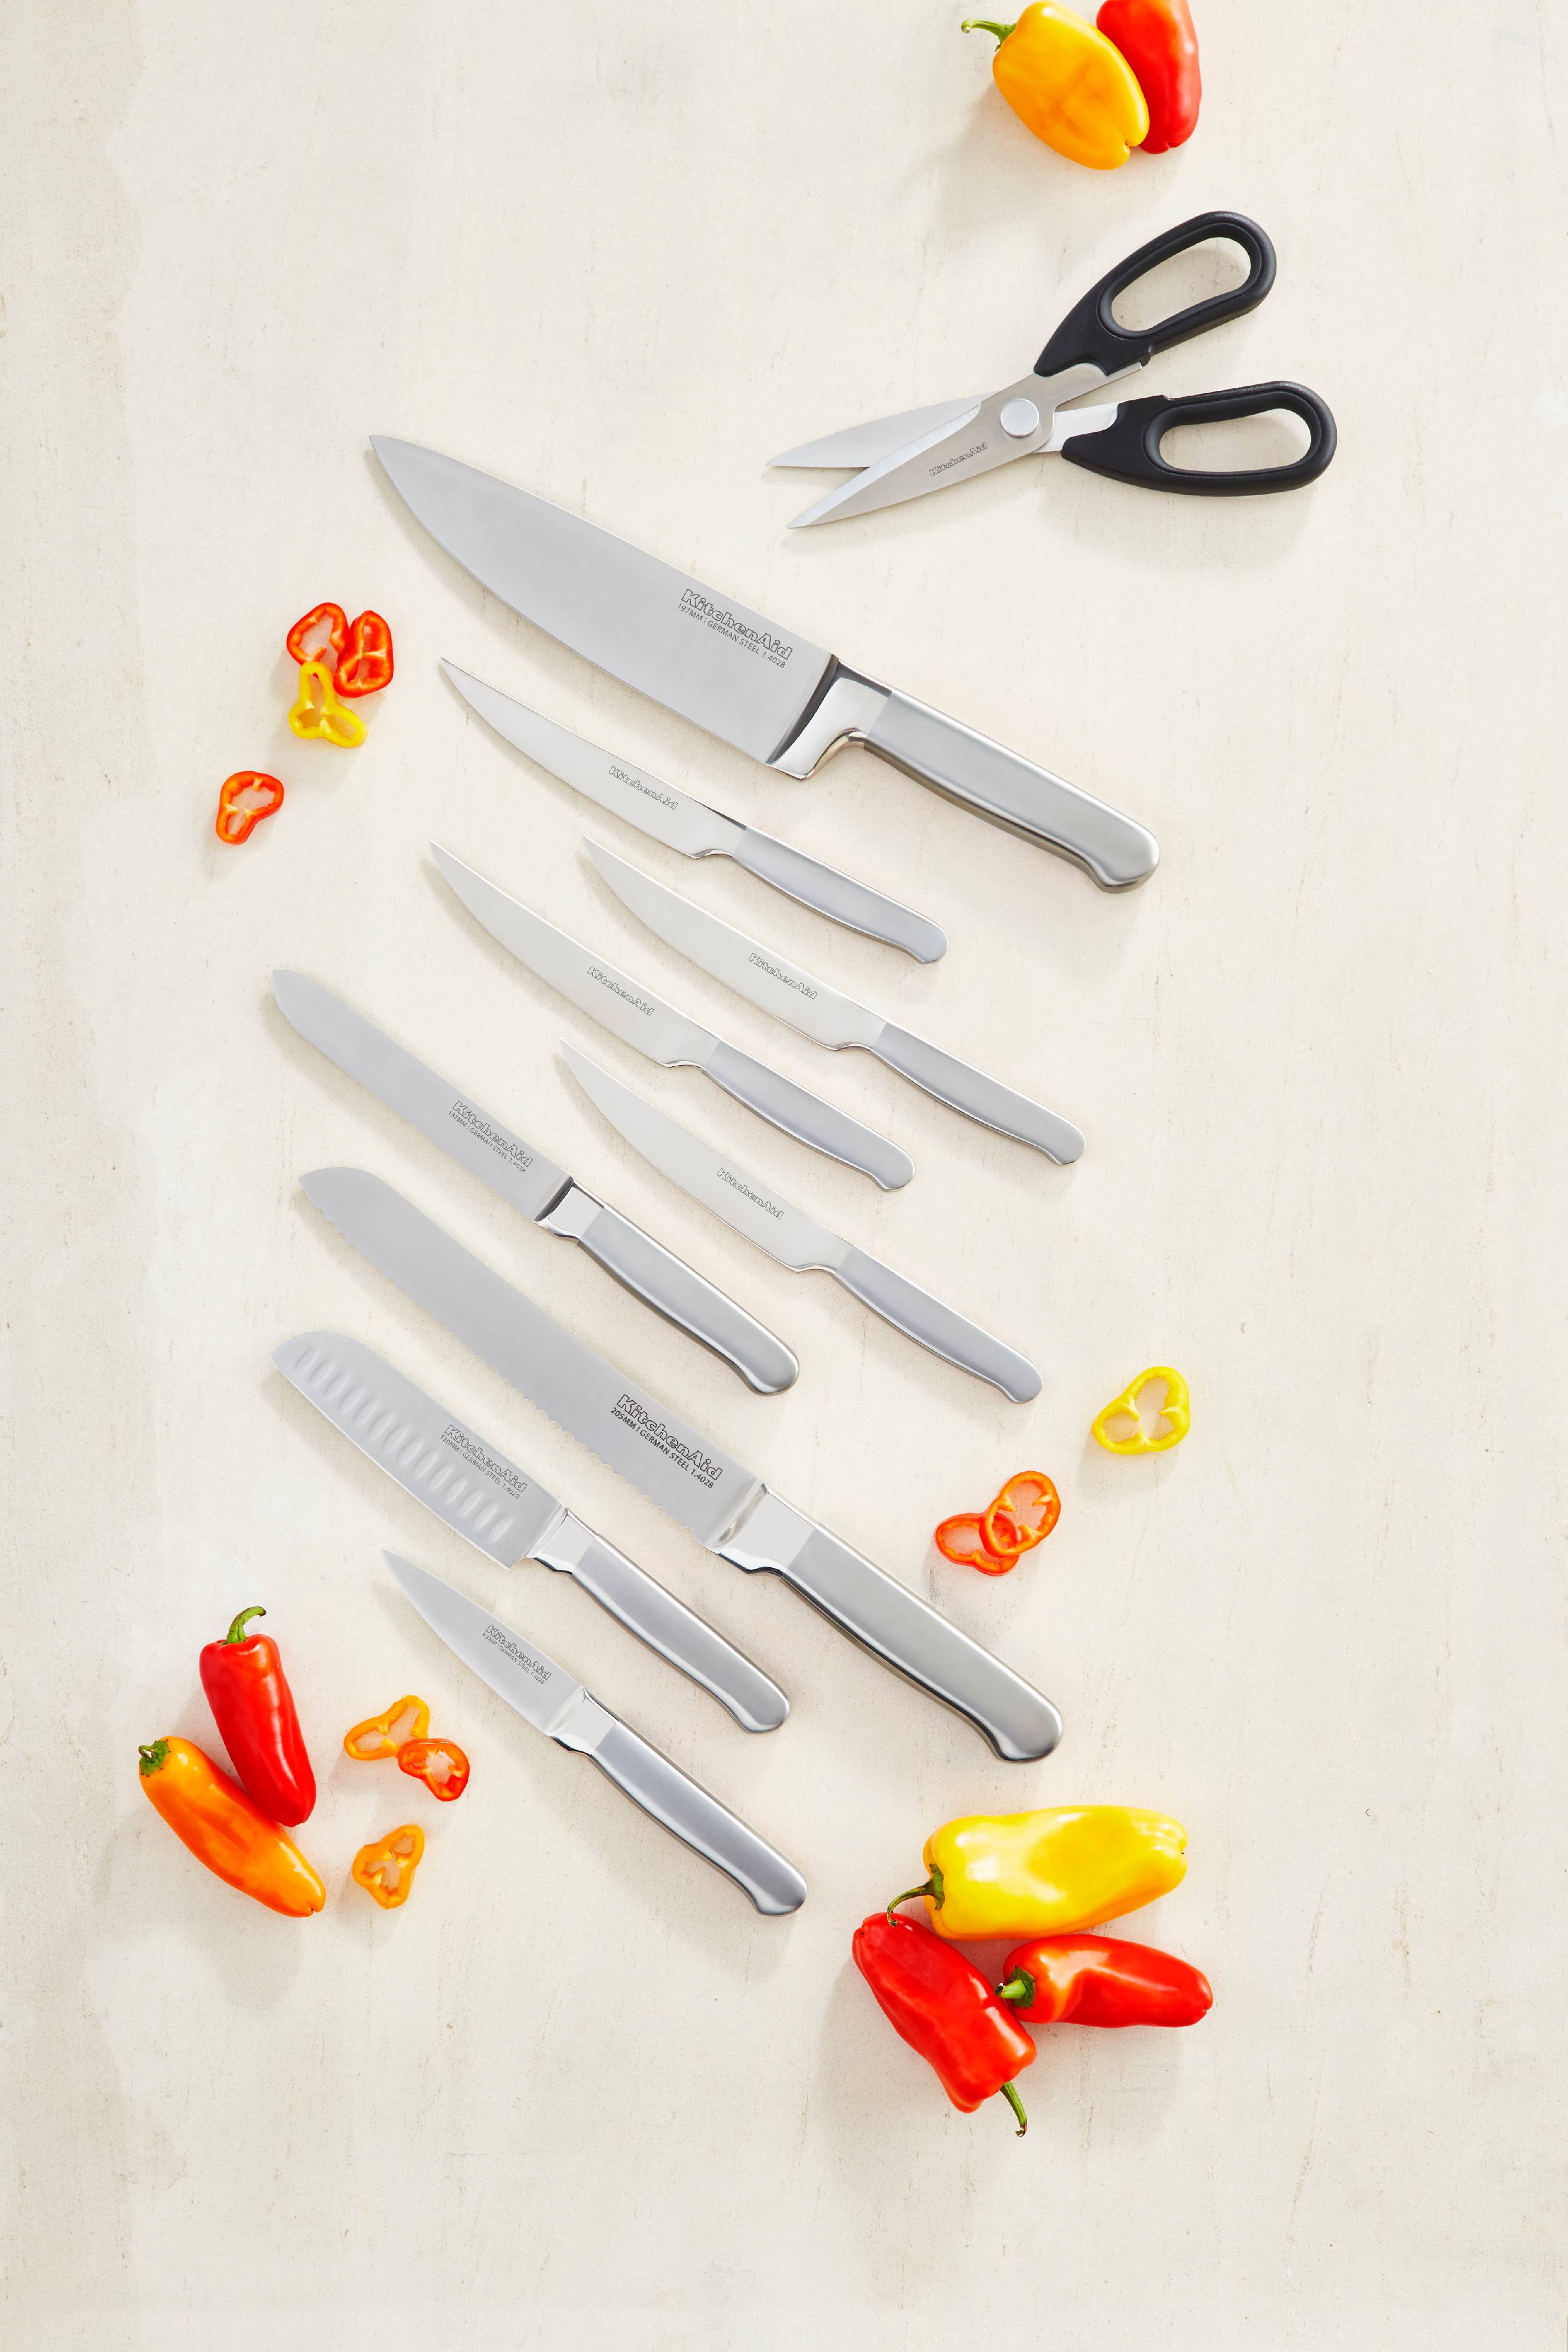 KitchenAid Classic 12-Piece Knife Block Set only $39 shipped